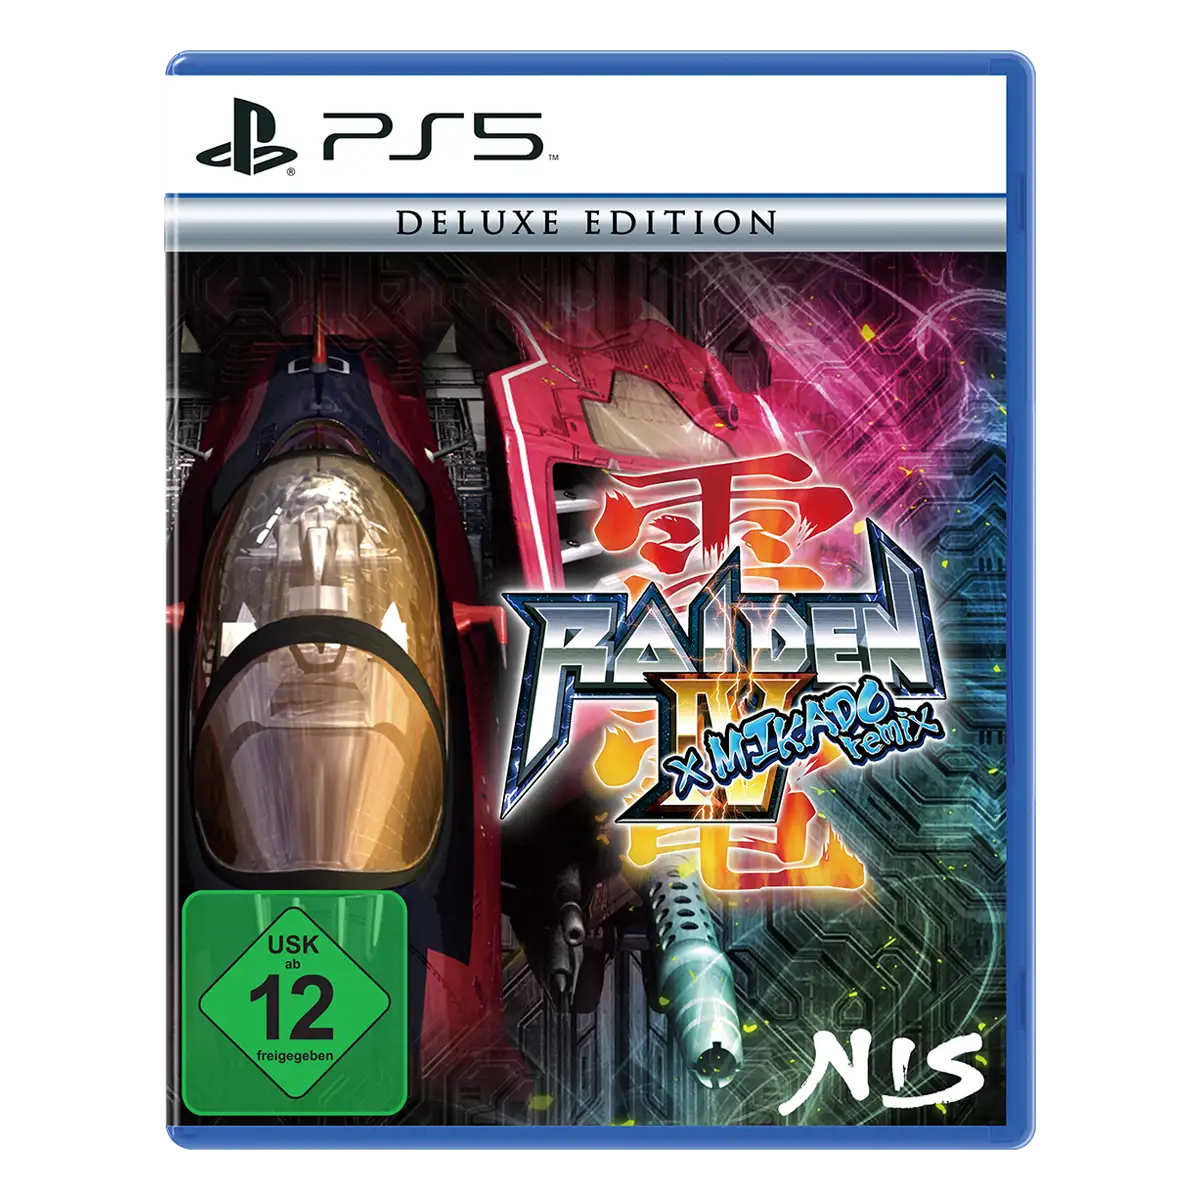 Raiden IV x MIKADO remix Deluxe Edition (PS5)